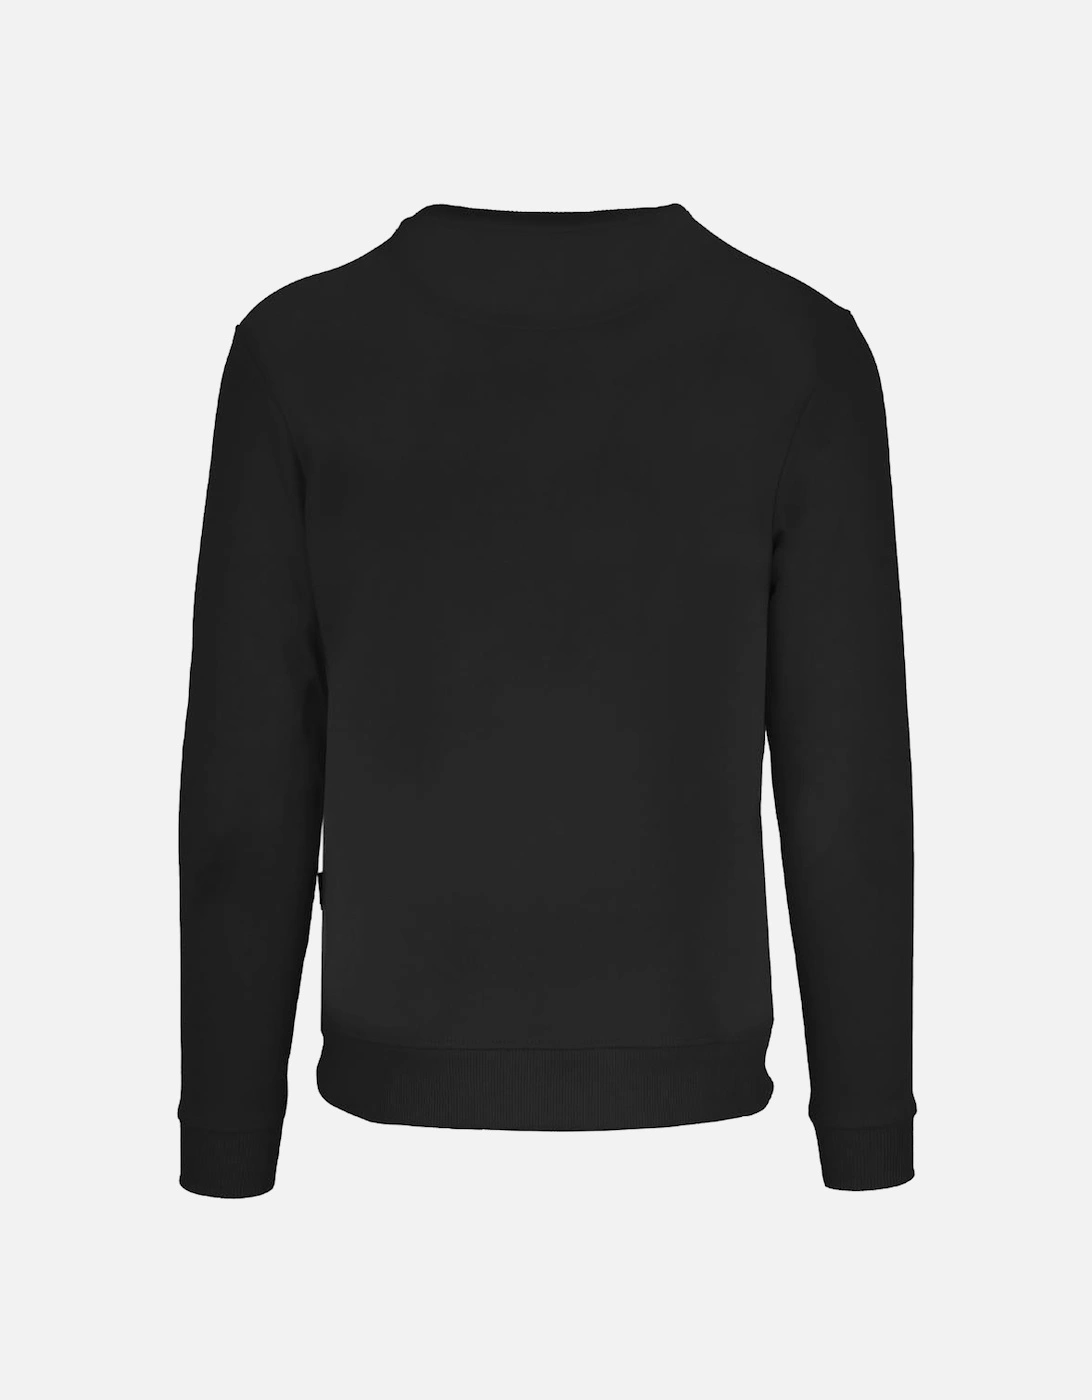 Bold London Logo Black Sweatshirt